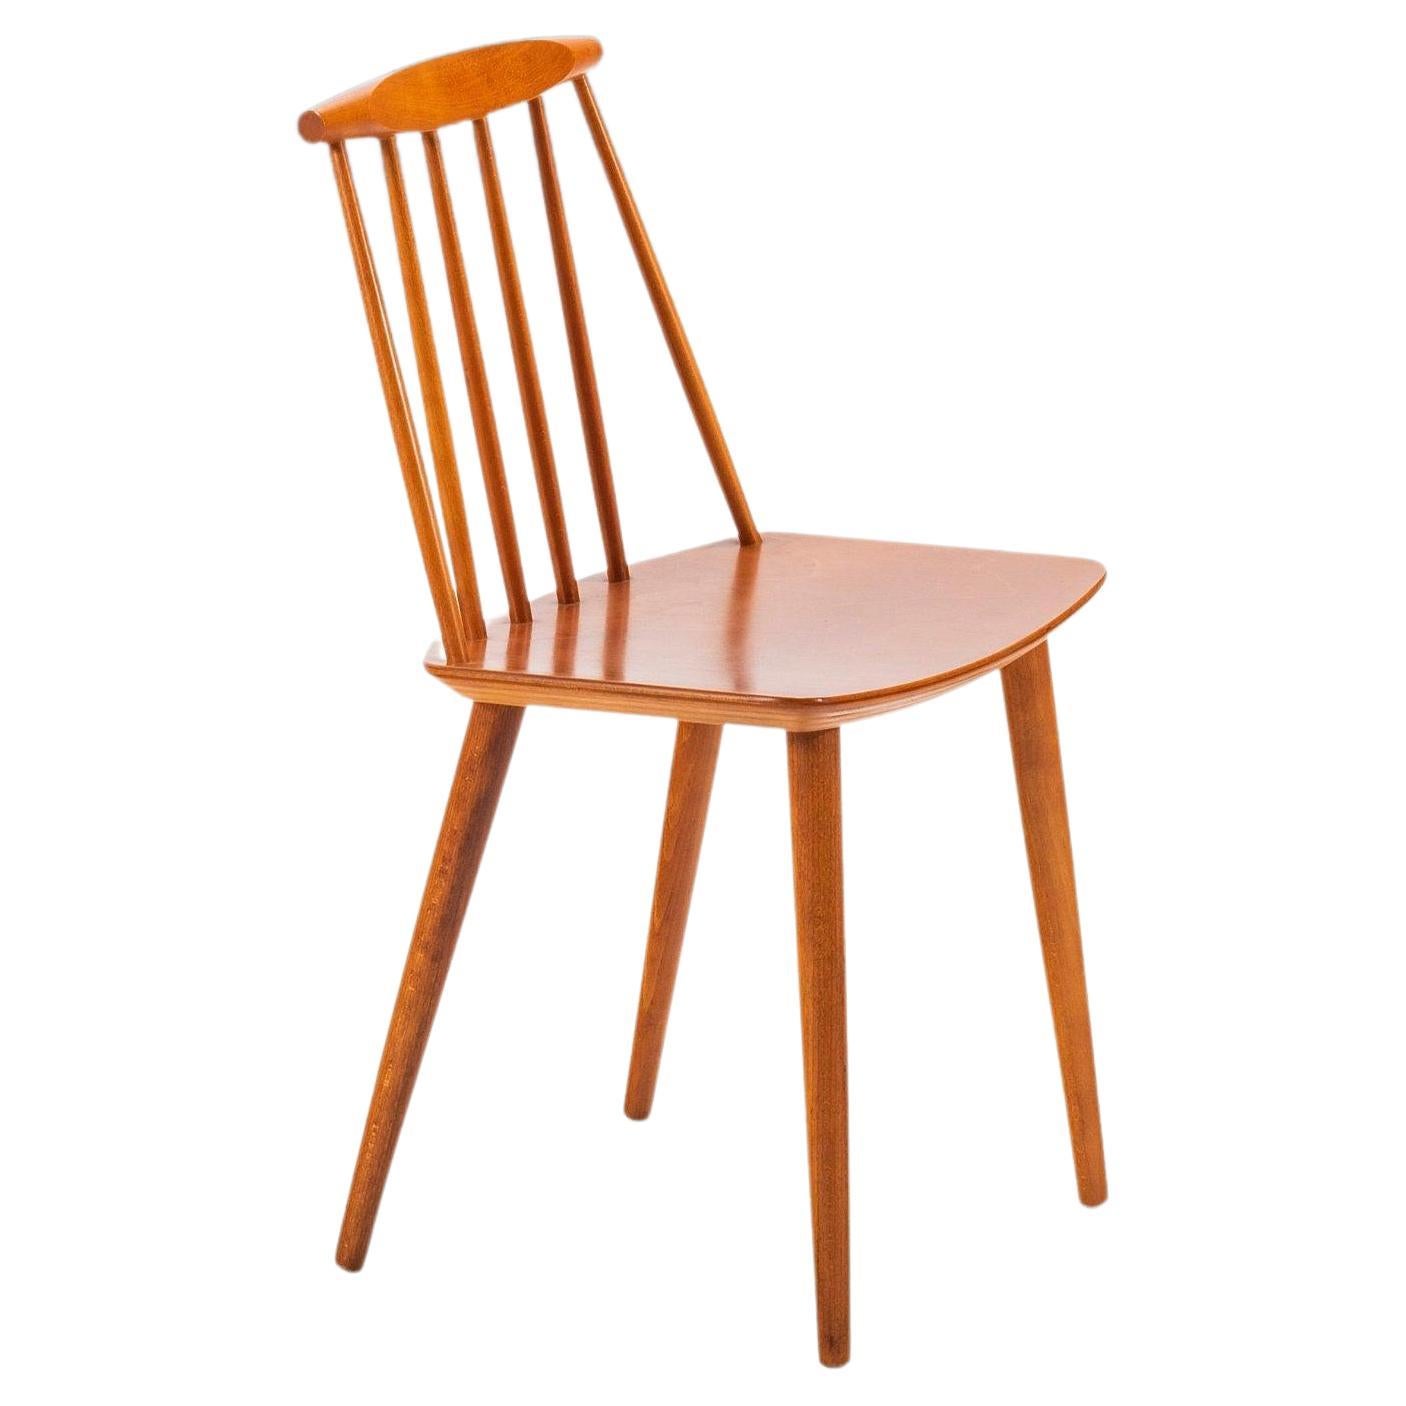 Model J 77 'Farmhouse' Chair in Teak by Folke Palsson for FDB Møbelfabrik, 1960s For Sale